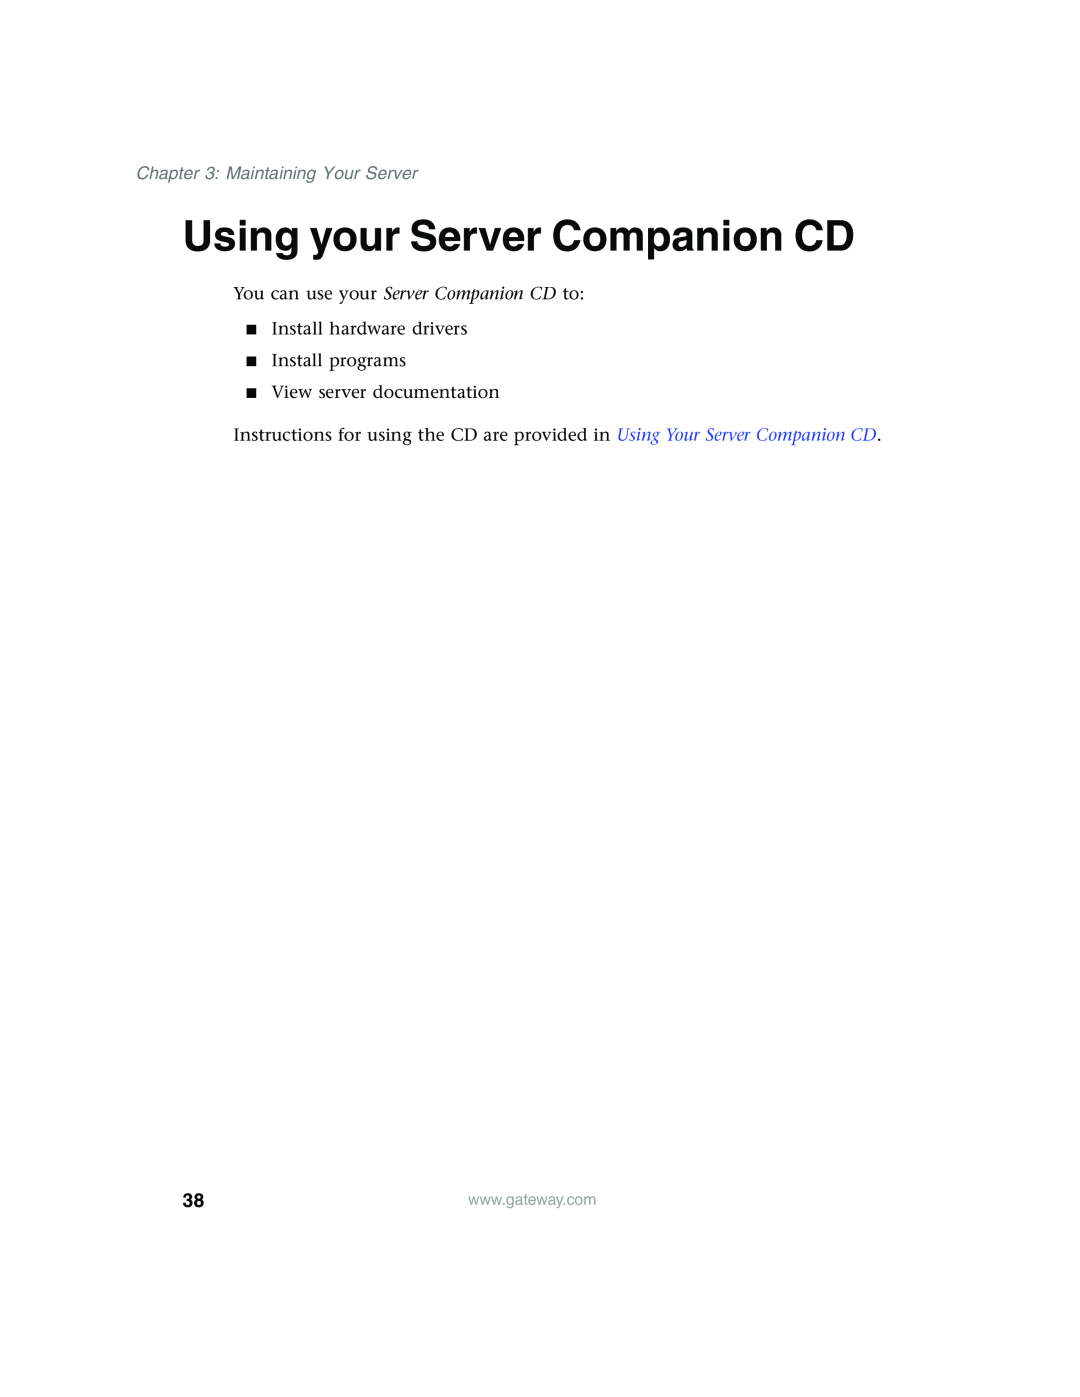 Gateway 960 manual Using your Server Companion CD, Maintaining Your Server, Install programs View server documentation 